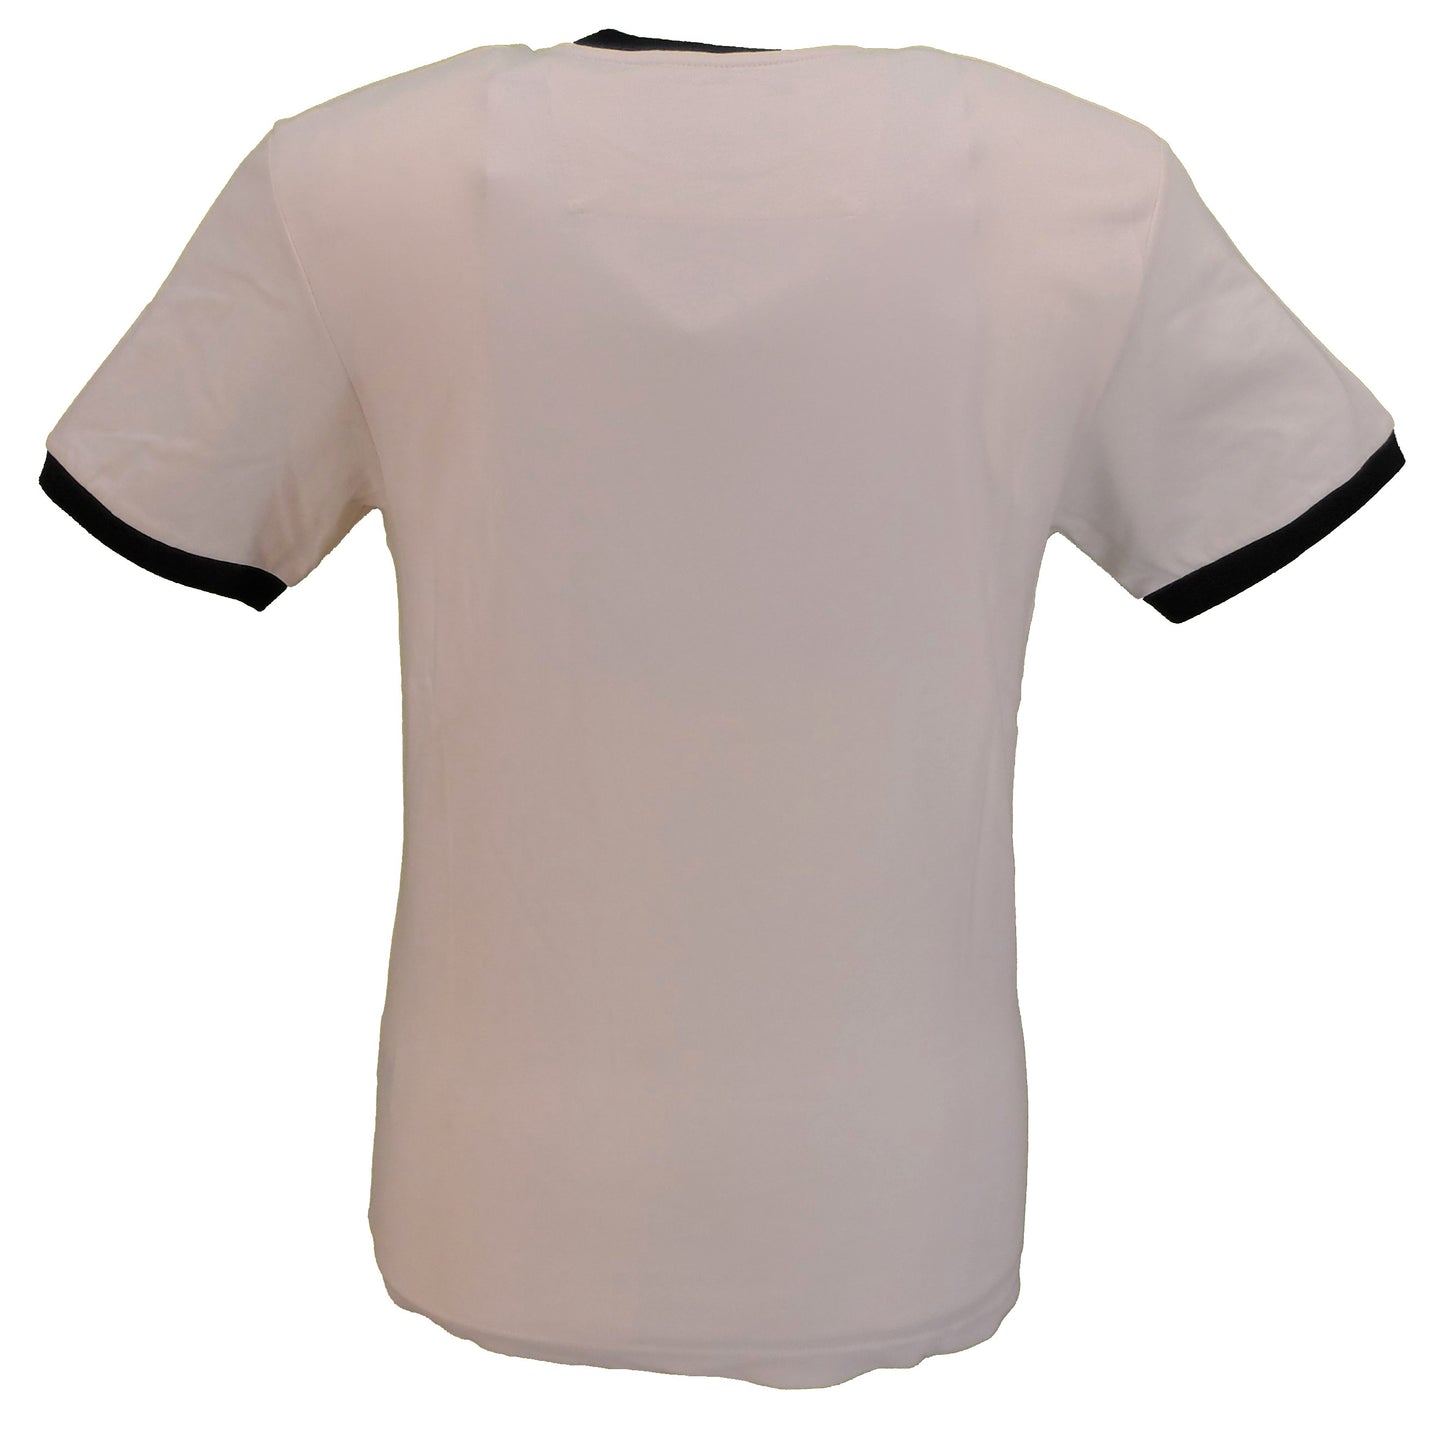 Trojan Records Camiseta color melocotón para hombre, color crudo Spirit of 69, 100% algodón